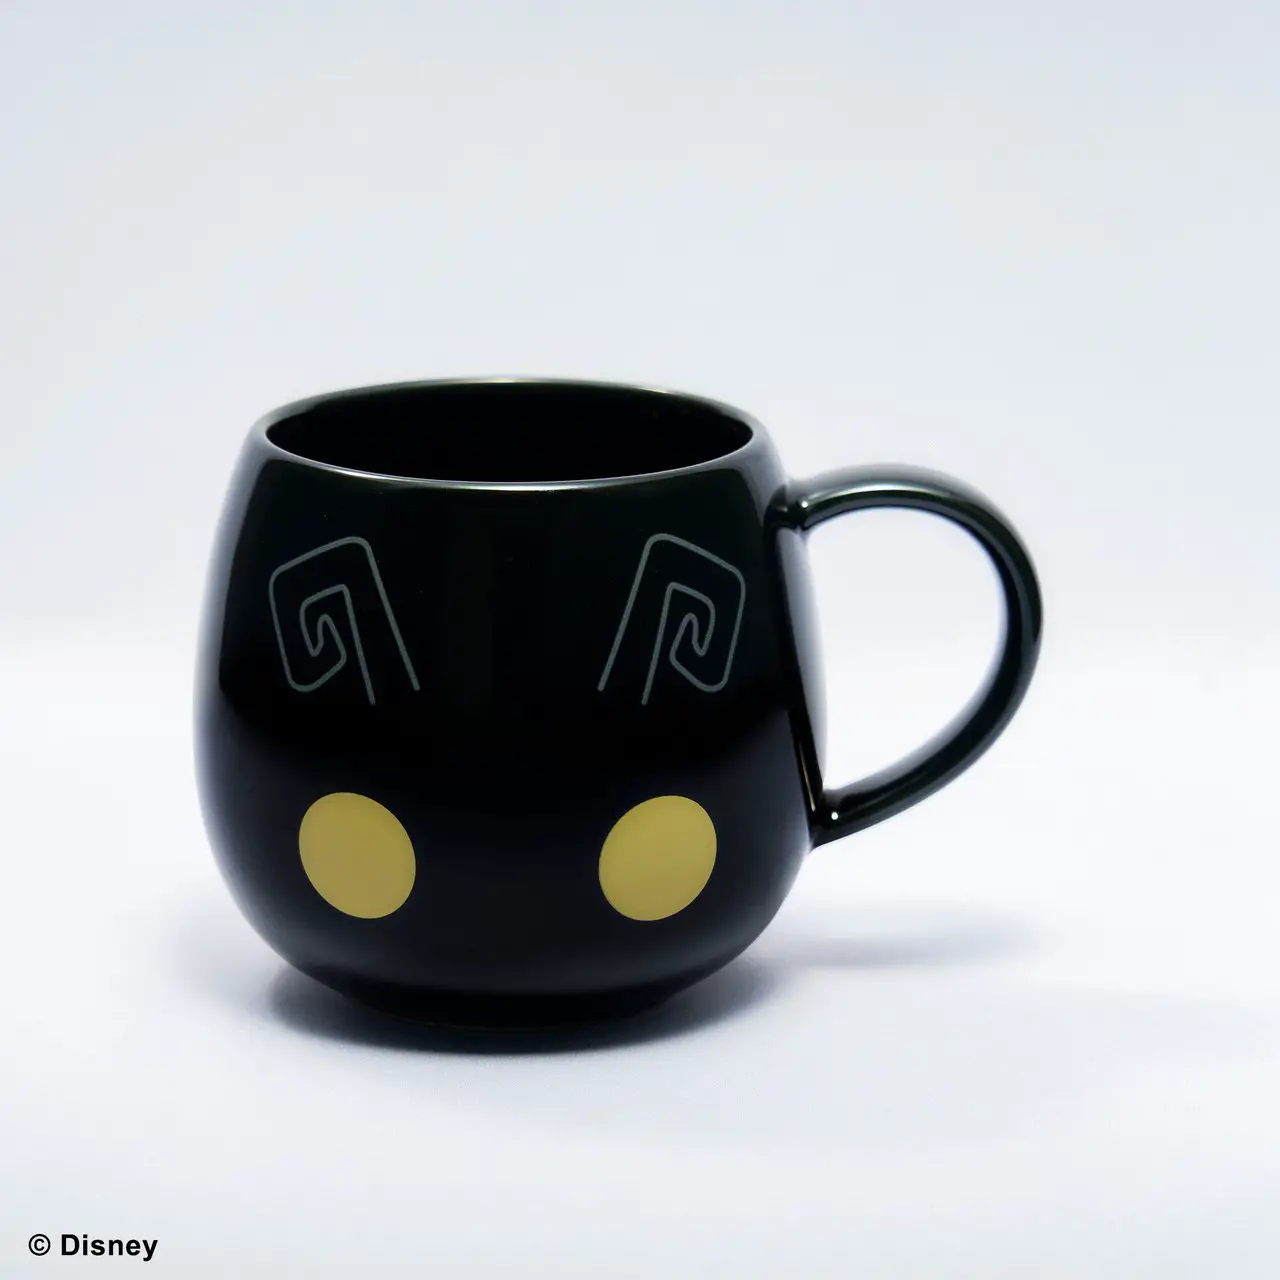 Kingdom Hearts Shadow Heartless Mug Announced for Pre-Order